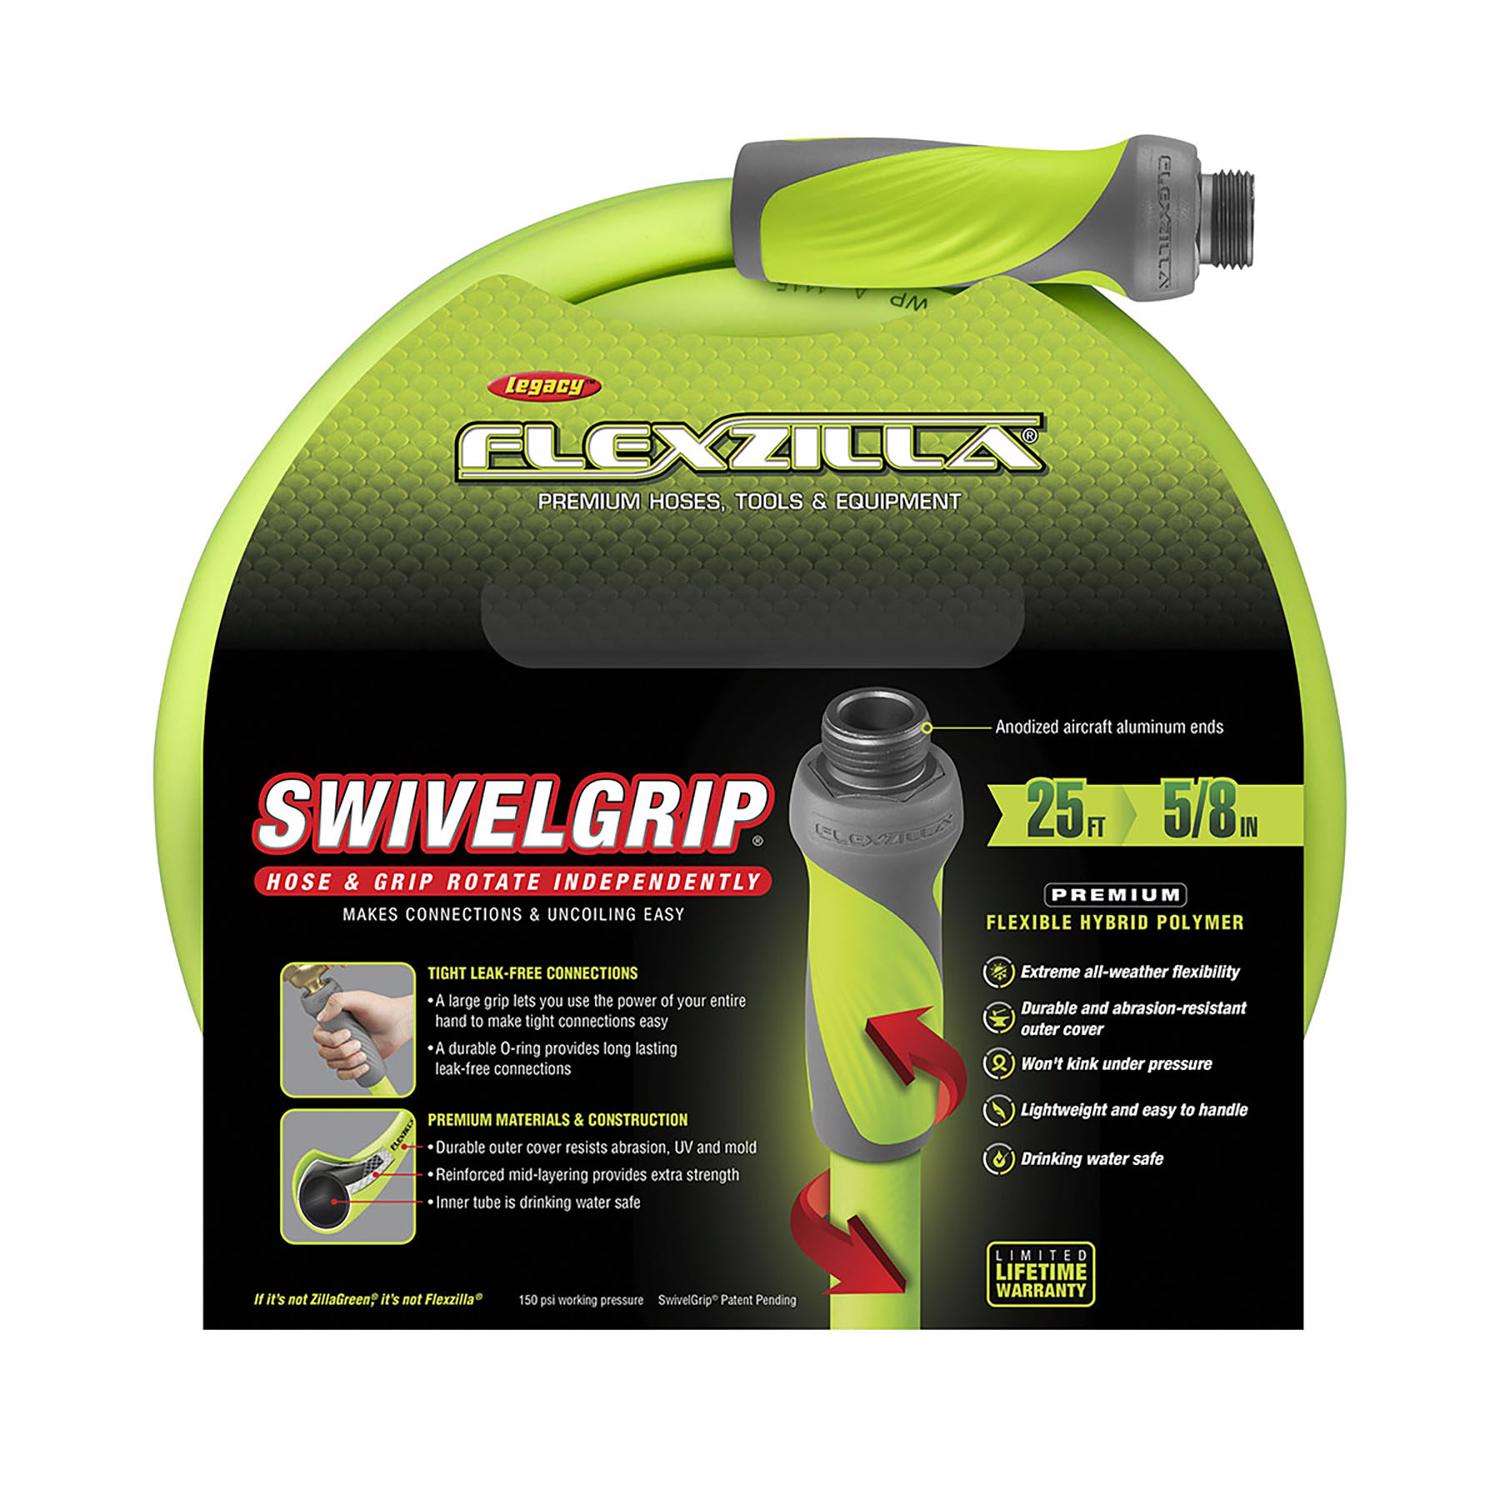 Flexzilla SwivelGrip Garden Hose, 5/8 x 25